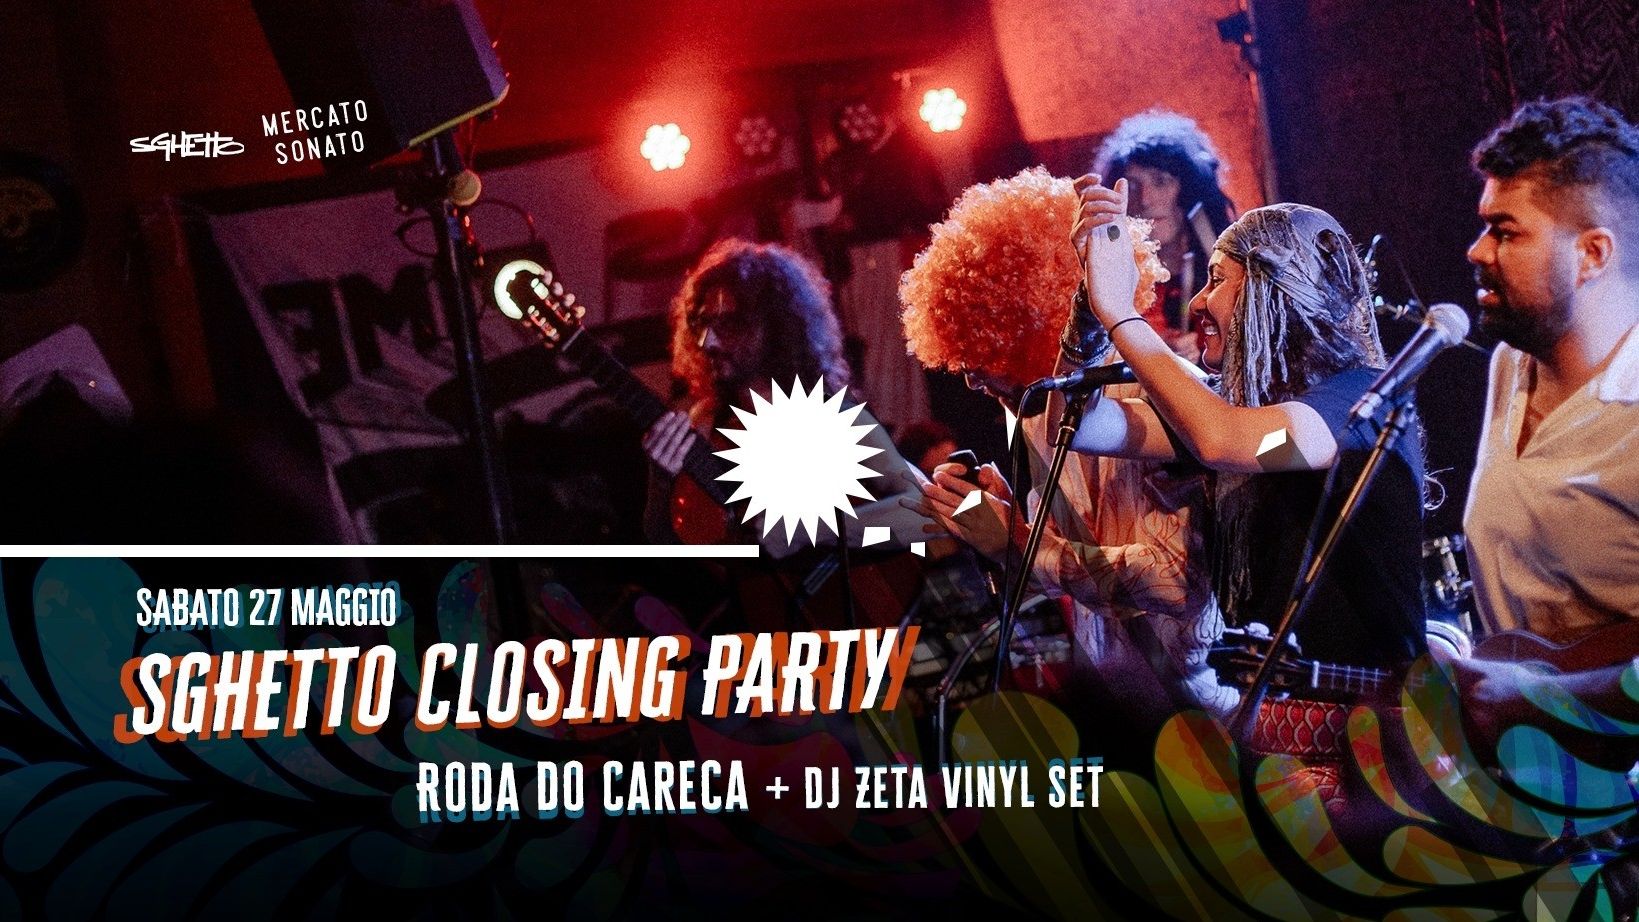 Sghetto Closing Party - Roda do Careca + Dj Zeta vinyl set